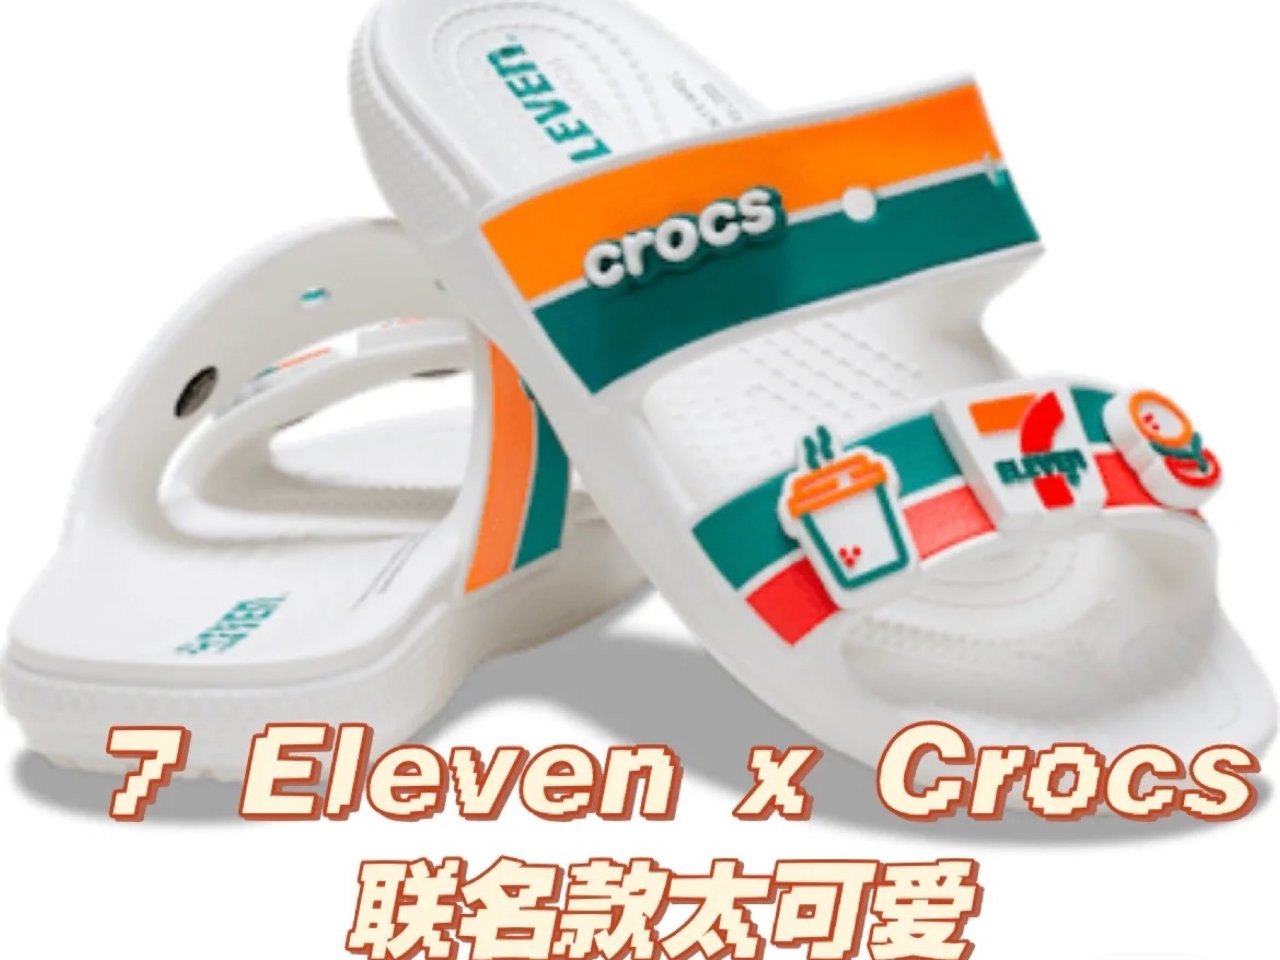 7-Eleven X Crocs Classic 2 Strap Sandal - Crocs